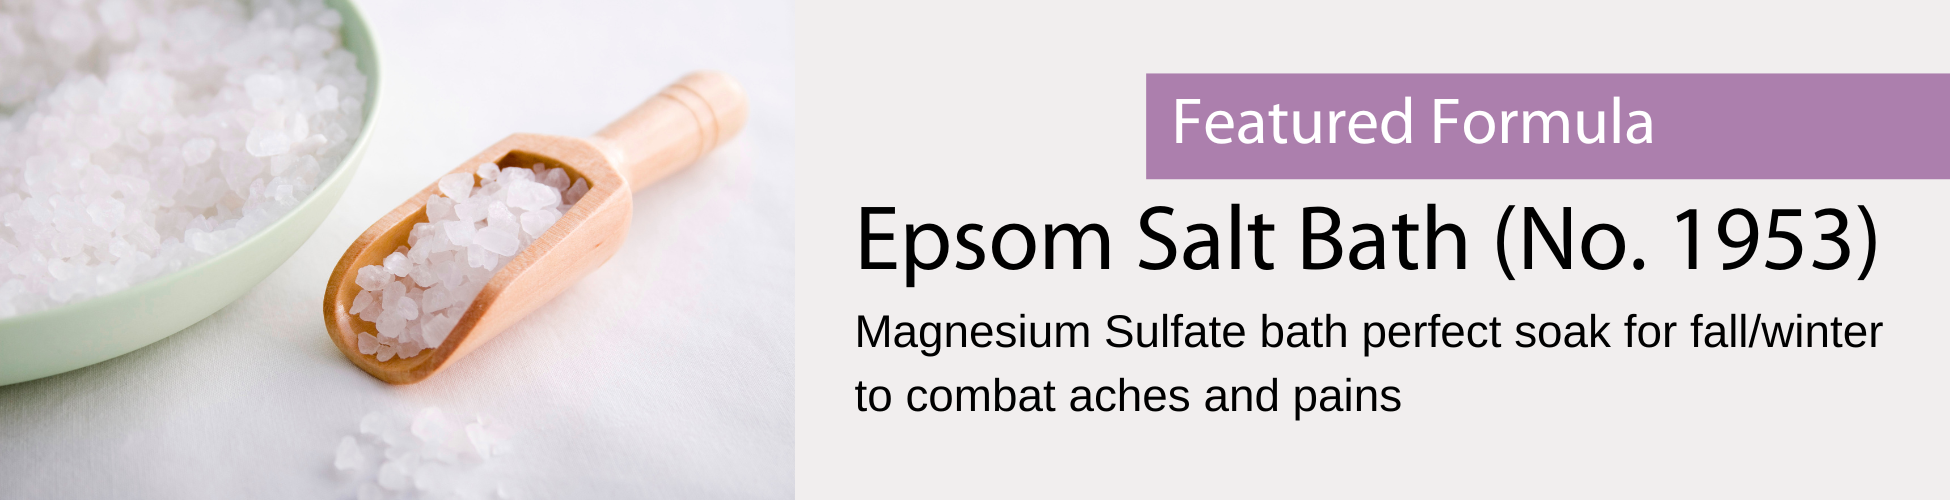 Formula for Epsom Salt Bath